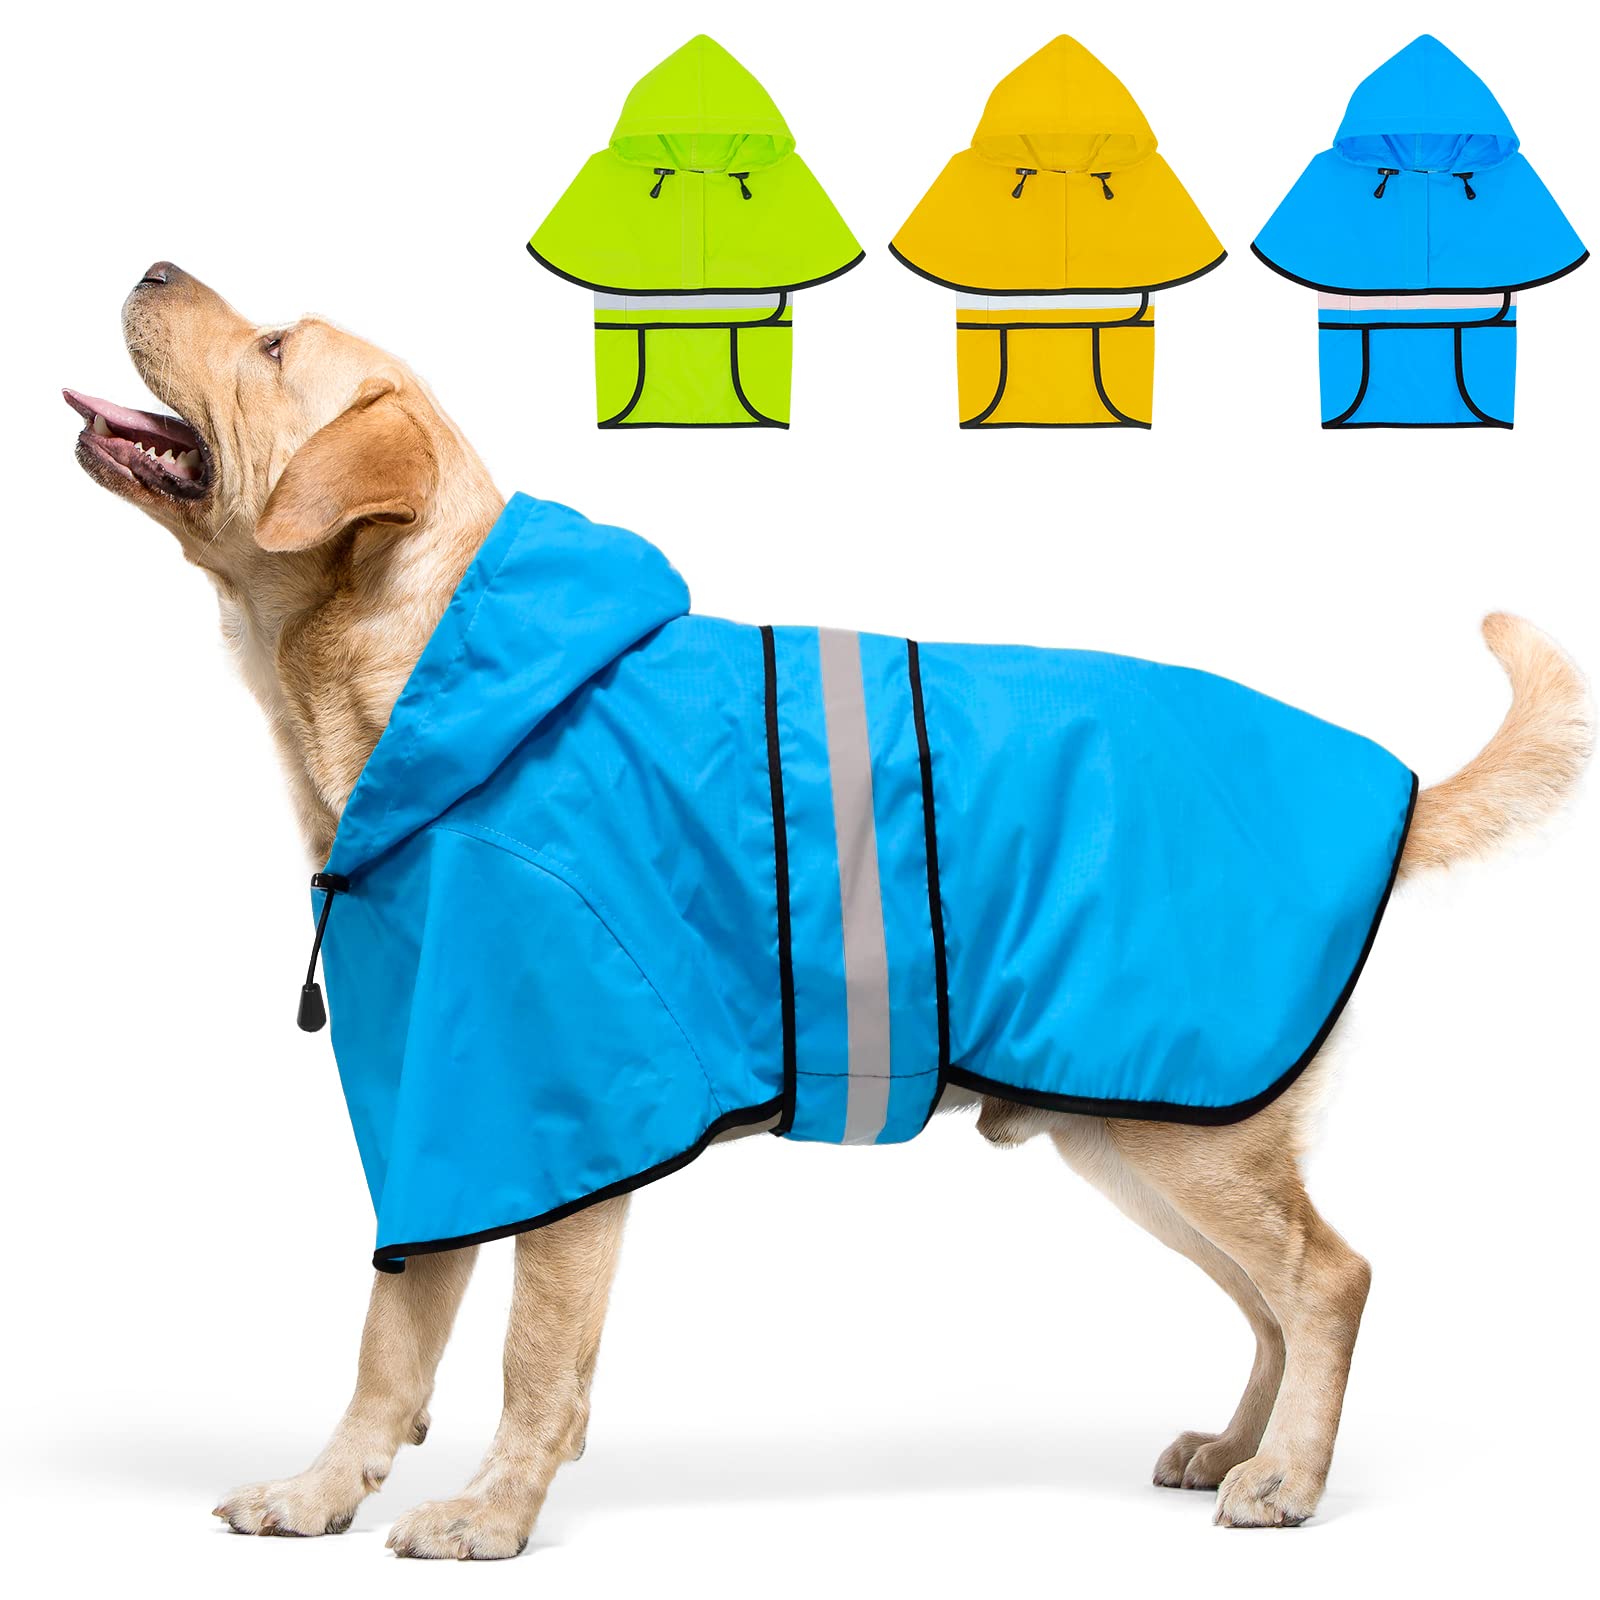 Dolitego Waterproof Adjustable Dog Raincoat - Reflective Dog Rain Jacket With Hoodie, Lightweight Dog Rain Coat Dog Poncho Slick